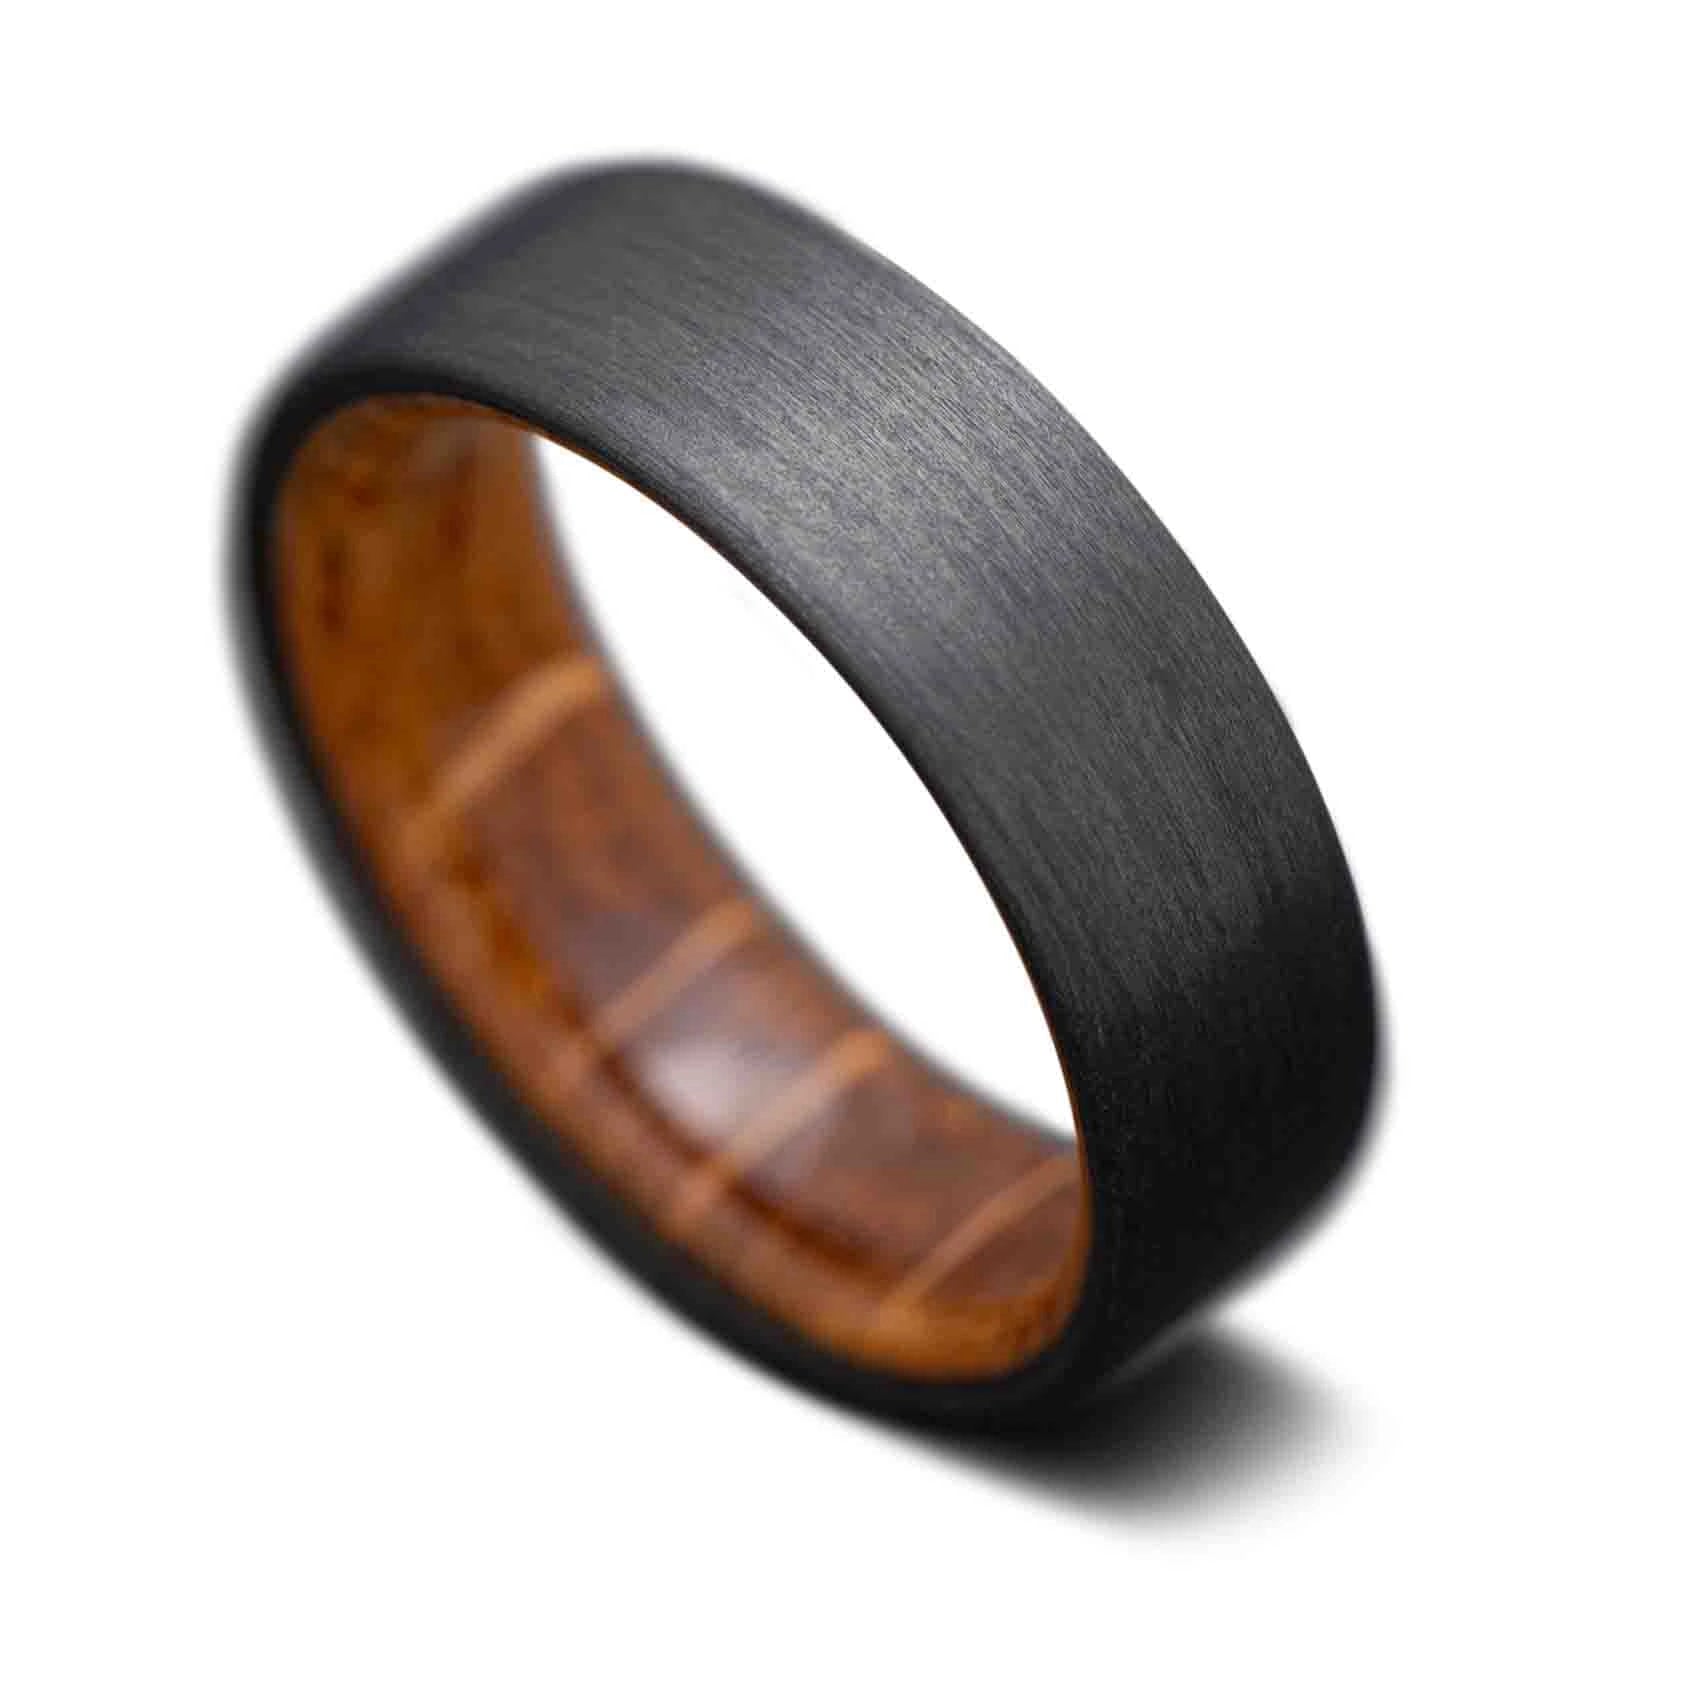 CarbonUni fiber ring with Whiskey barrel wood, 7mm -THE QUANTUM